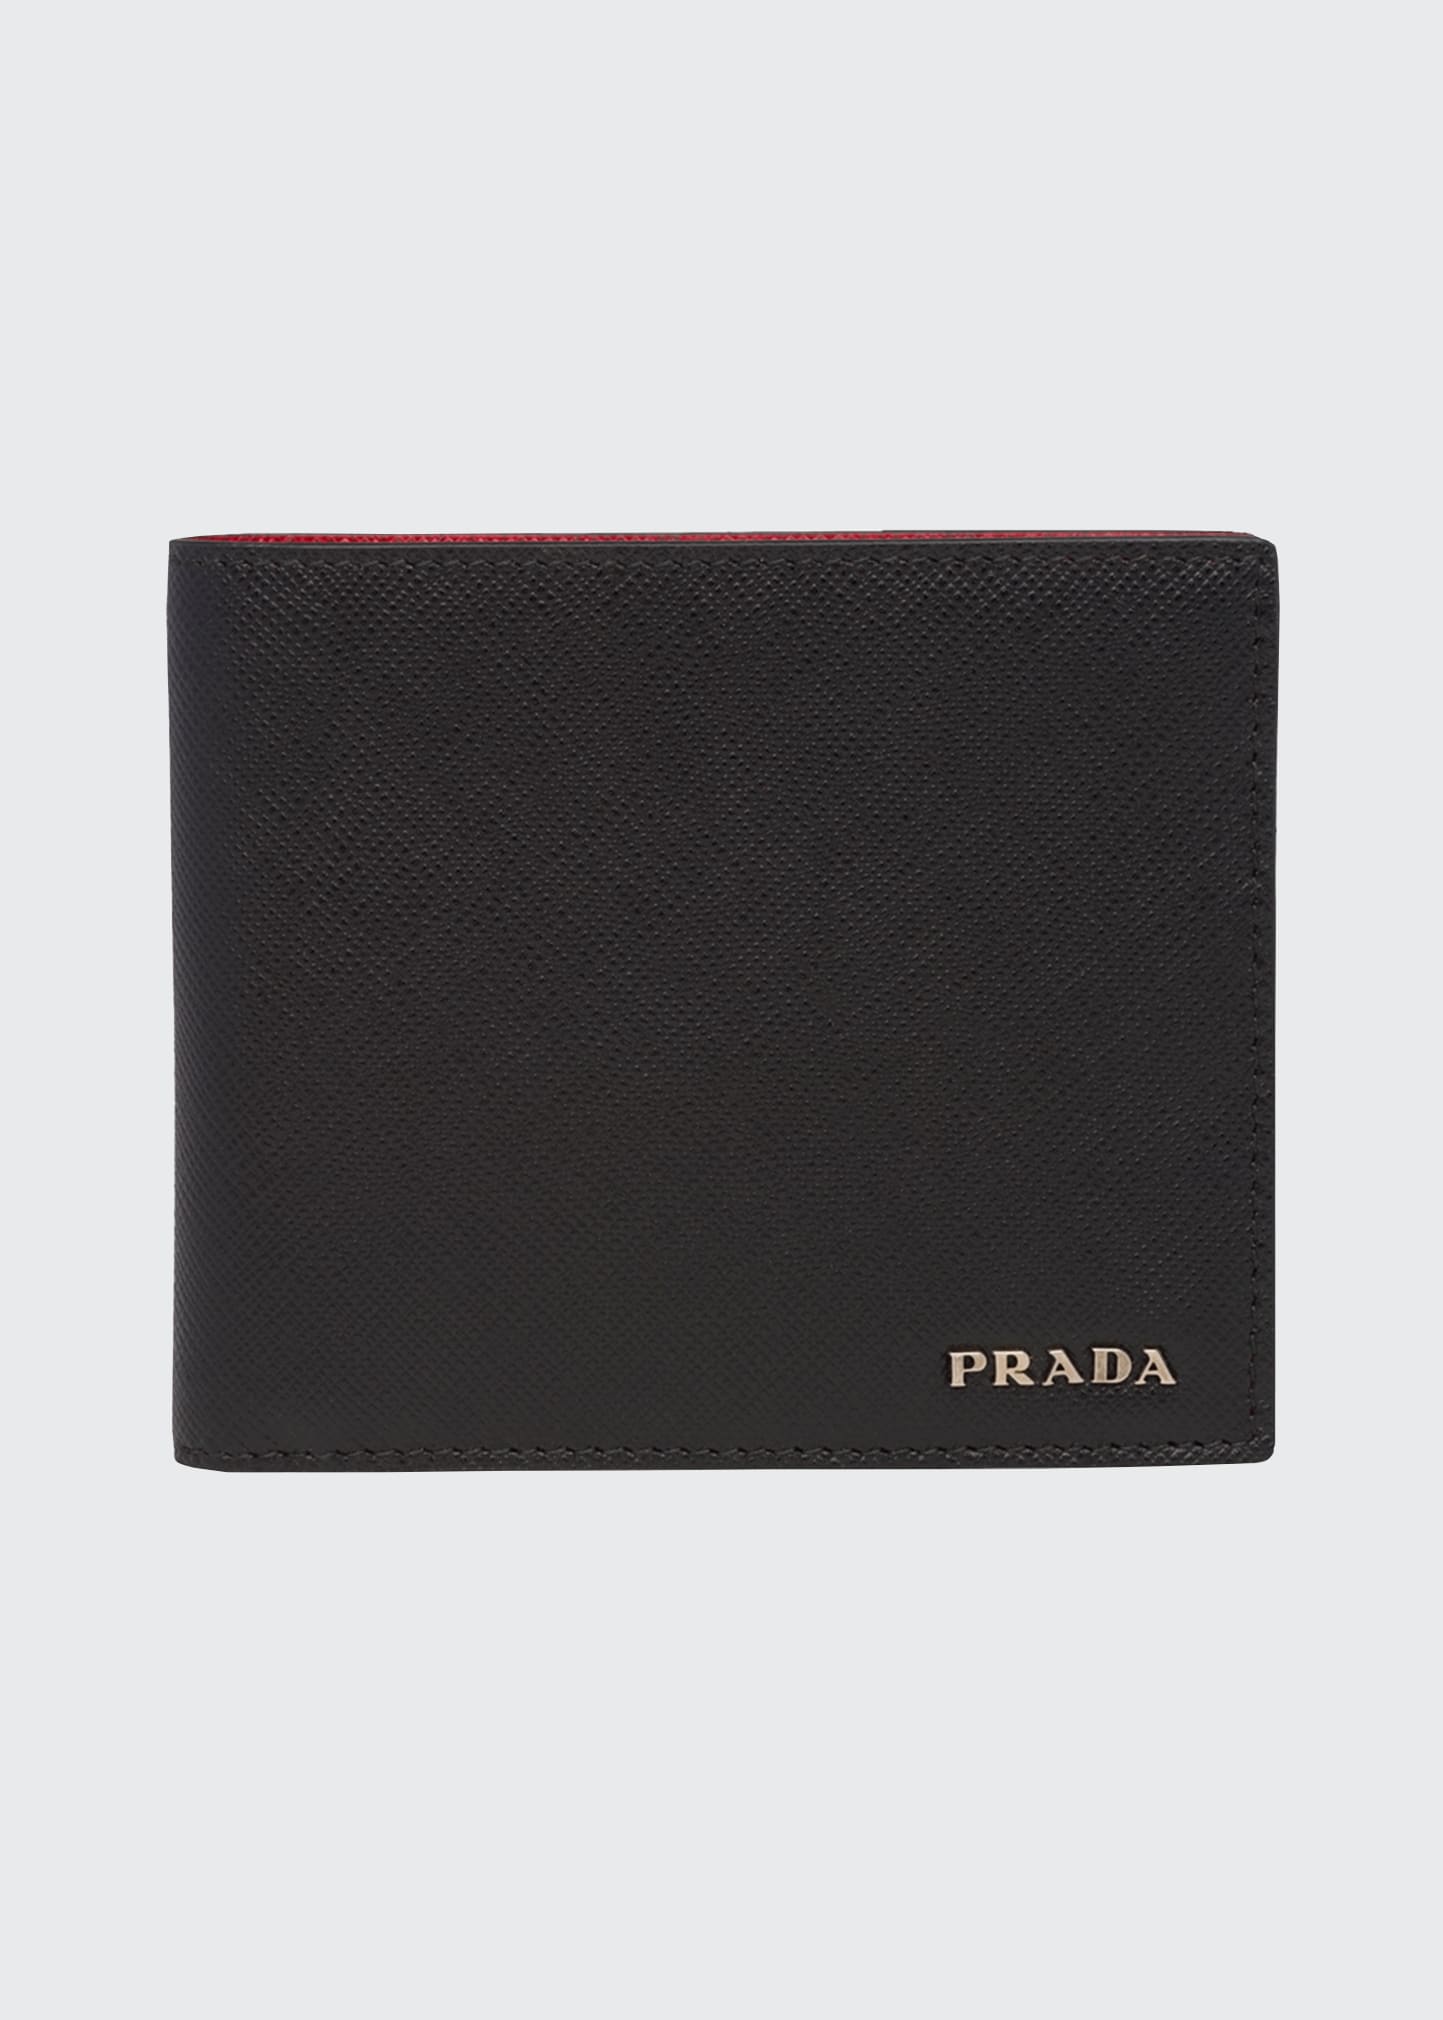 Prada Wallet Men in Black for Men